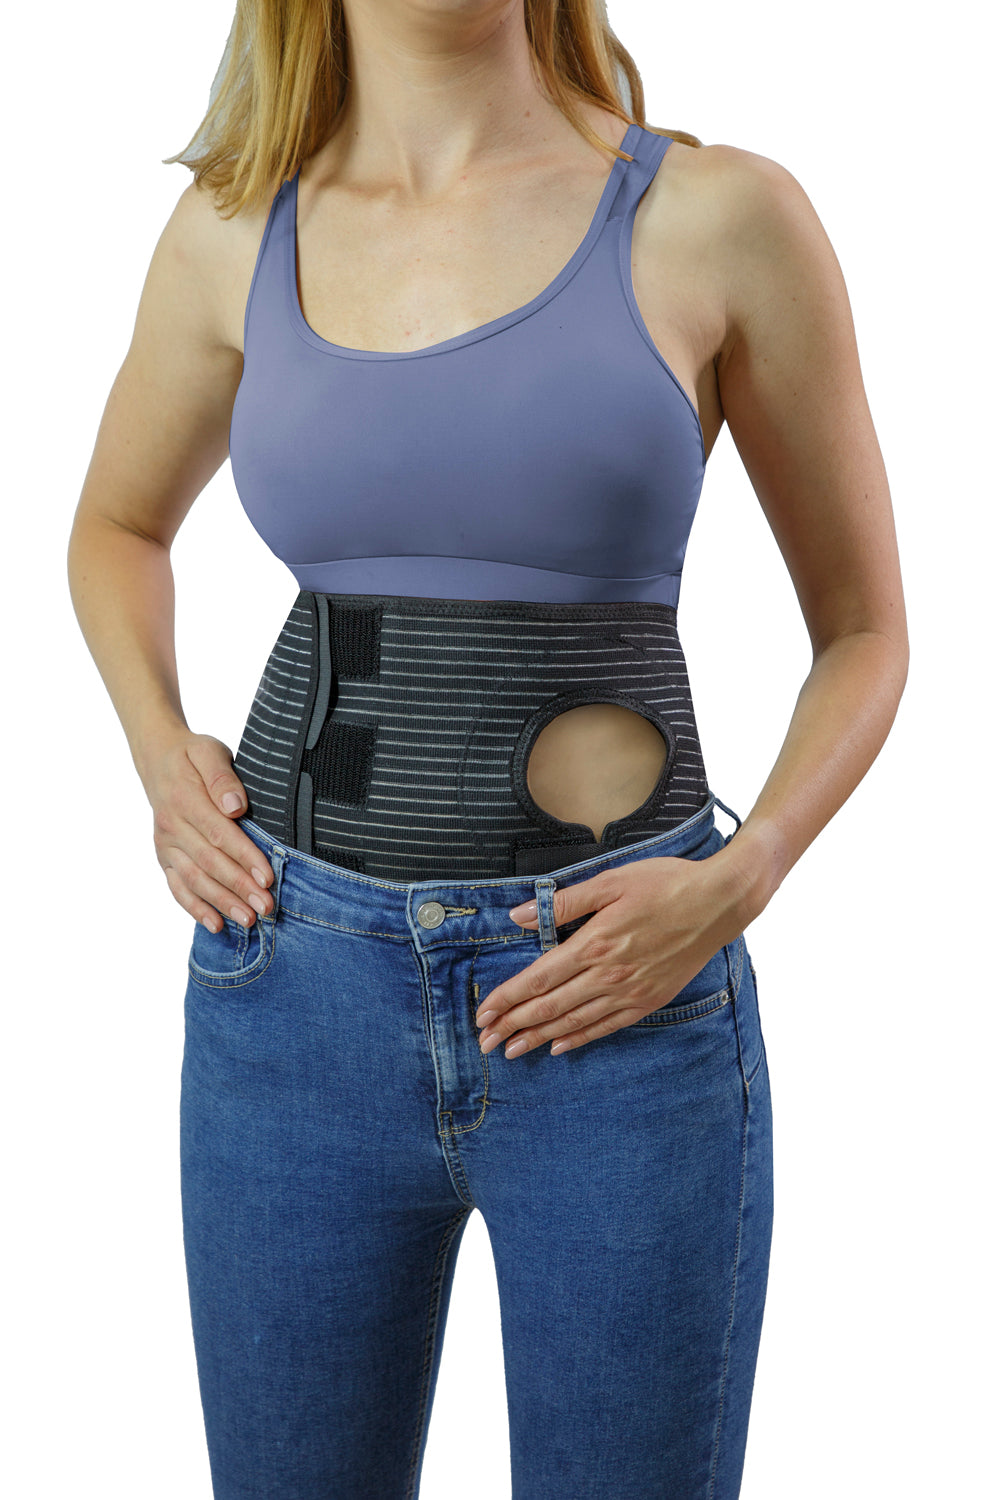 URIEL Abdominal Belt for Hanging Belly - Abdominal Binder for Post-surgery,  Men, Women, Belly Binder, Belly Support, Band Waist, Binder After Tummy